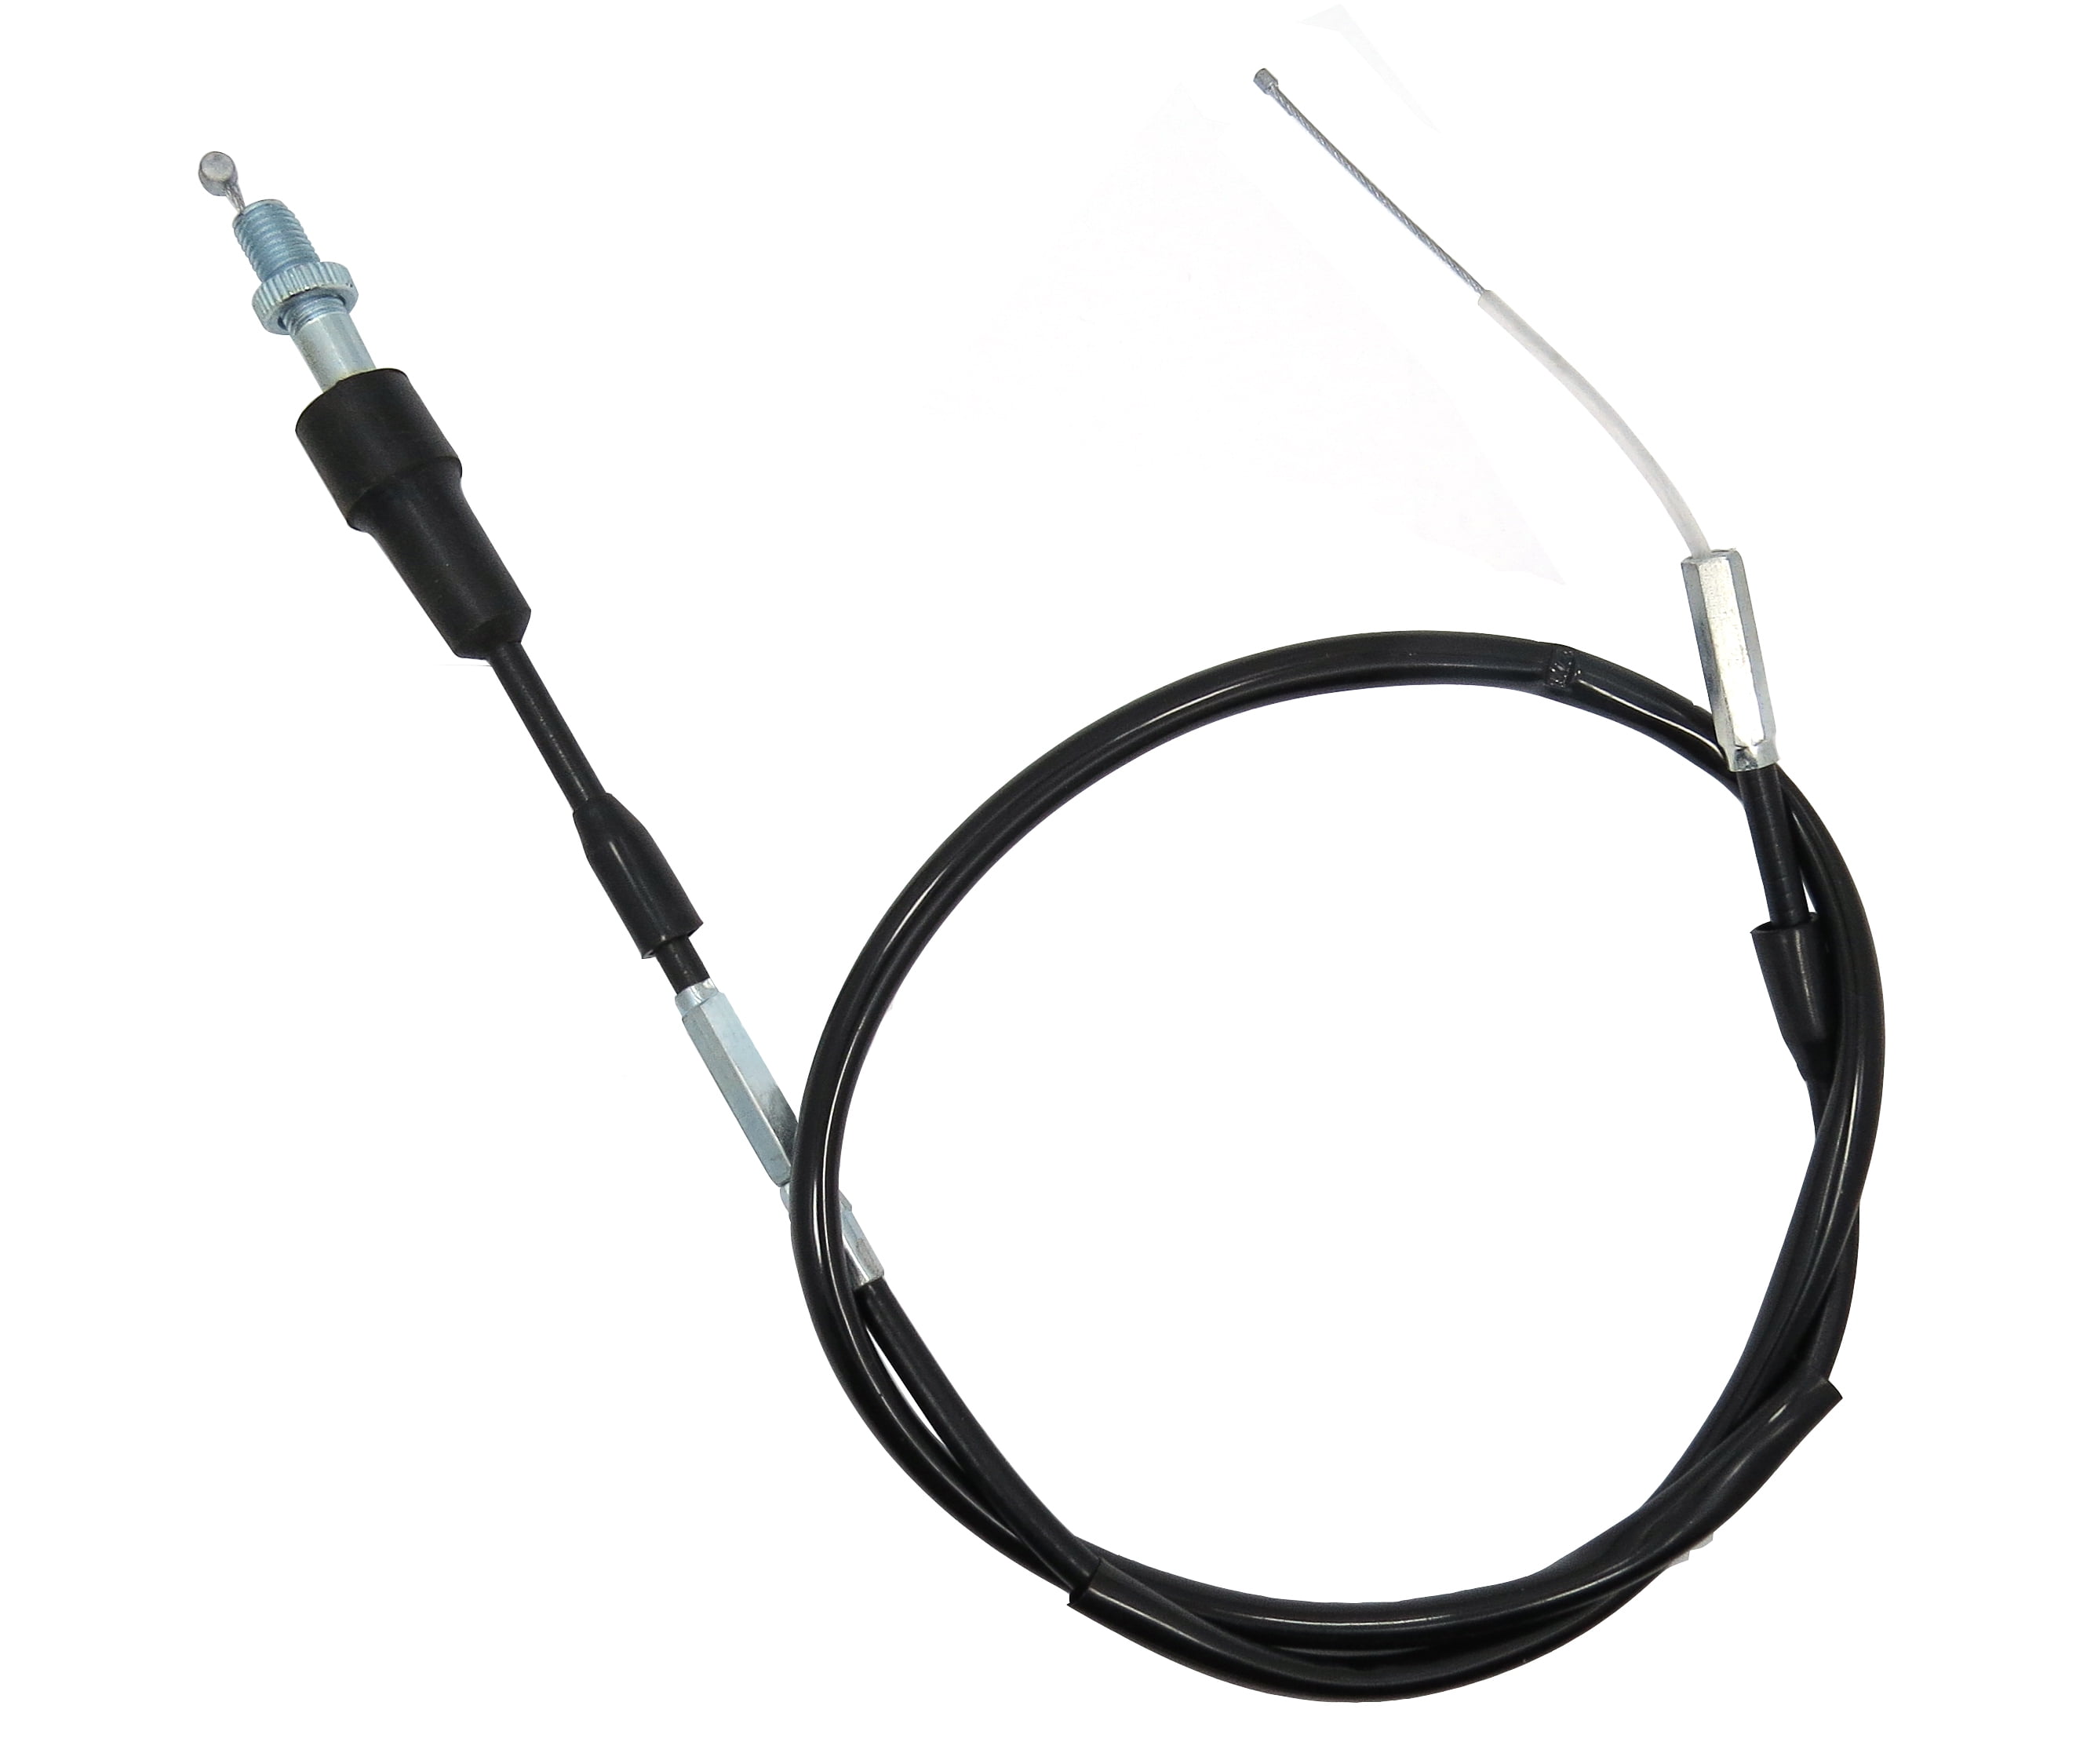 Race Driven OEM Replacement Throttle Cable for Yamaha Kodiak YFM400 Big Bear YFM350 Bear Tracker YFM250 Wolverine 350 